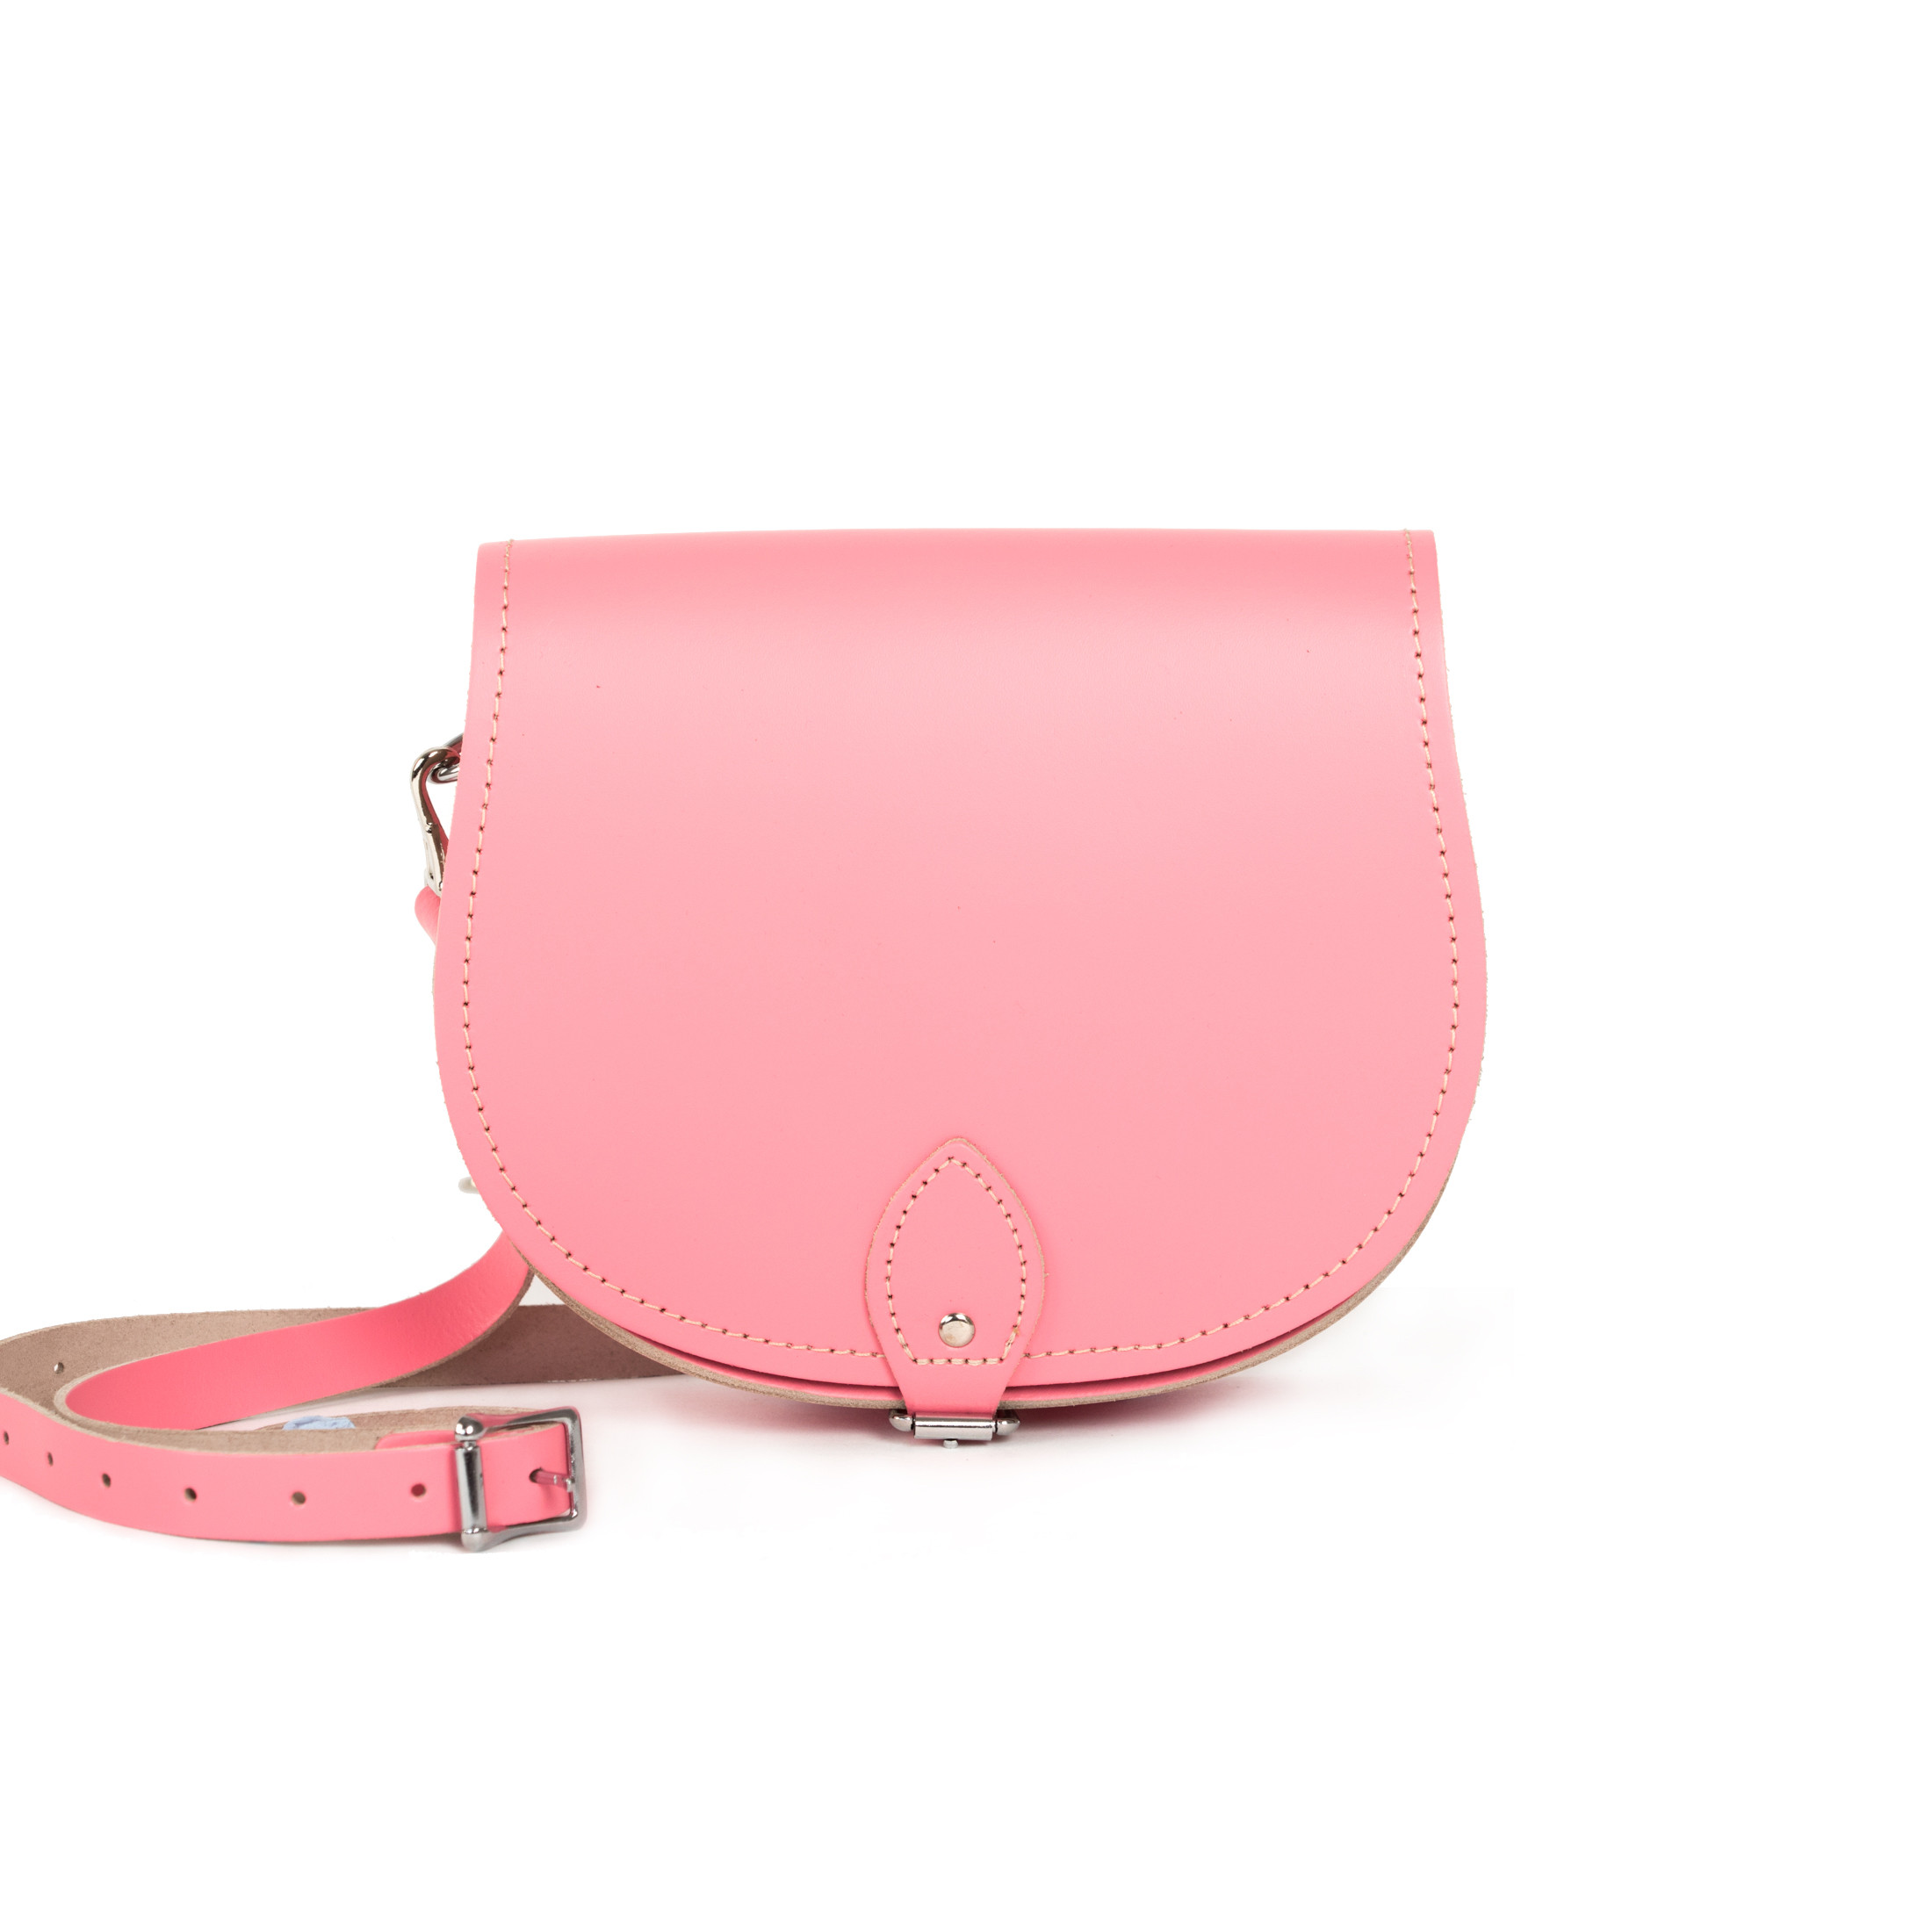 Avery Premium Leather Saddle Bag in Pastel Pink